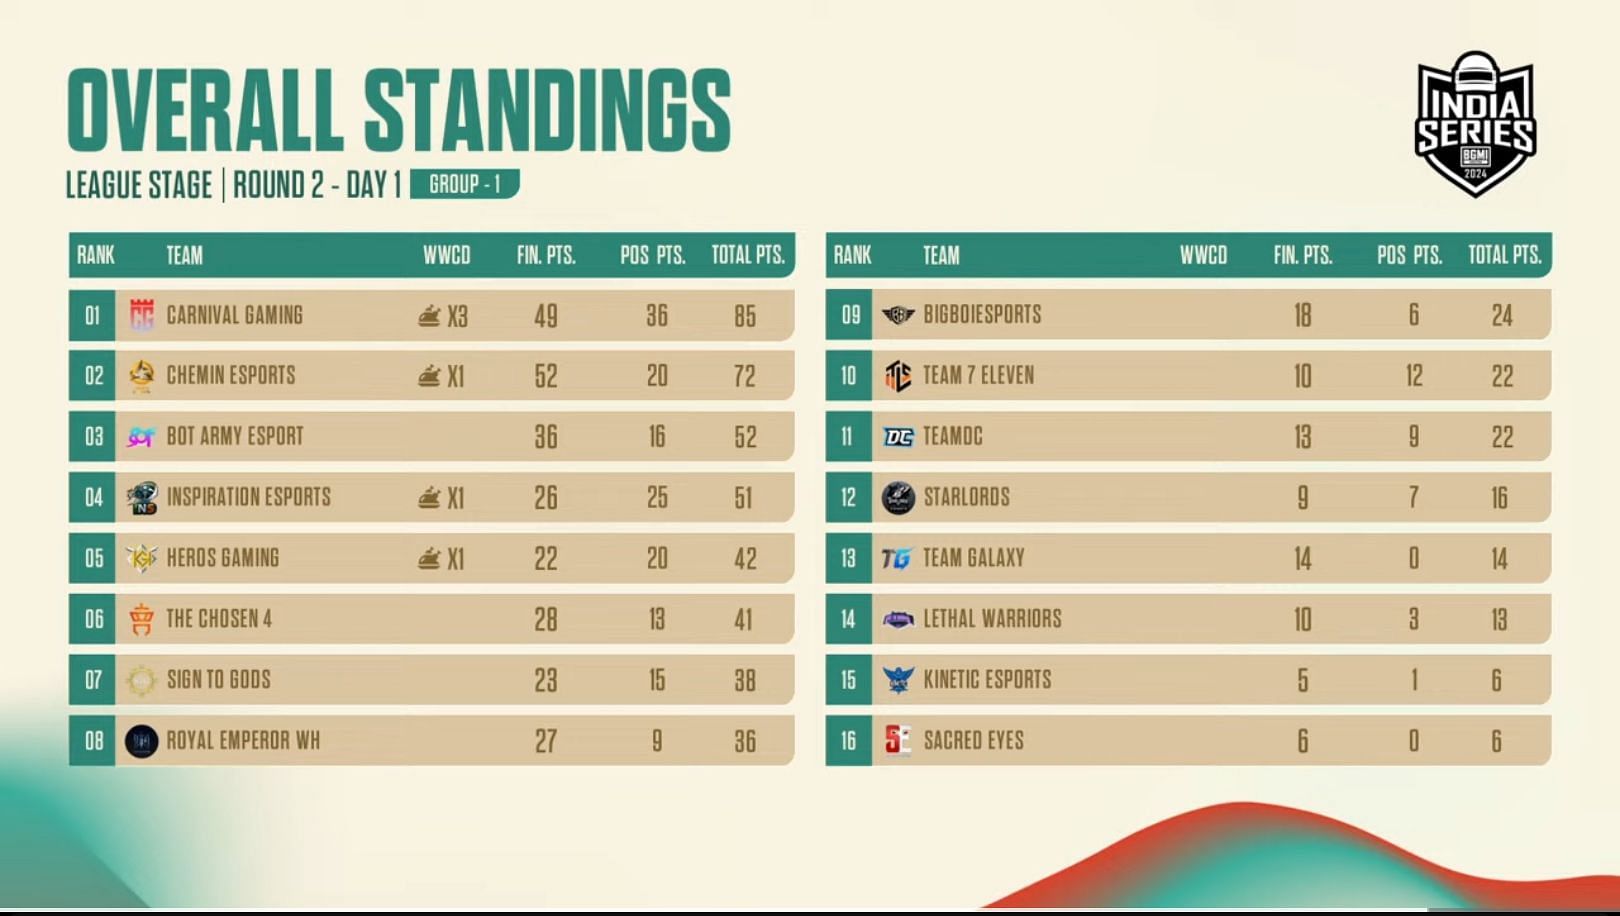 Group 1 overall standings of Round 2 (Image via BGMI)